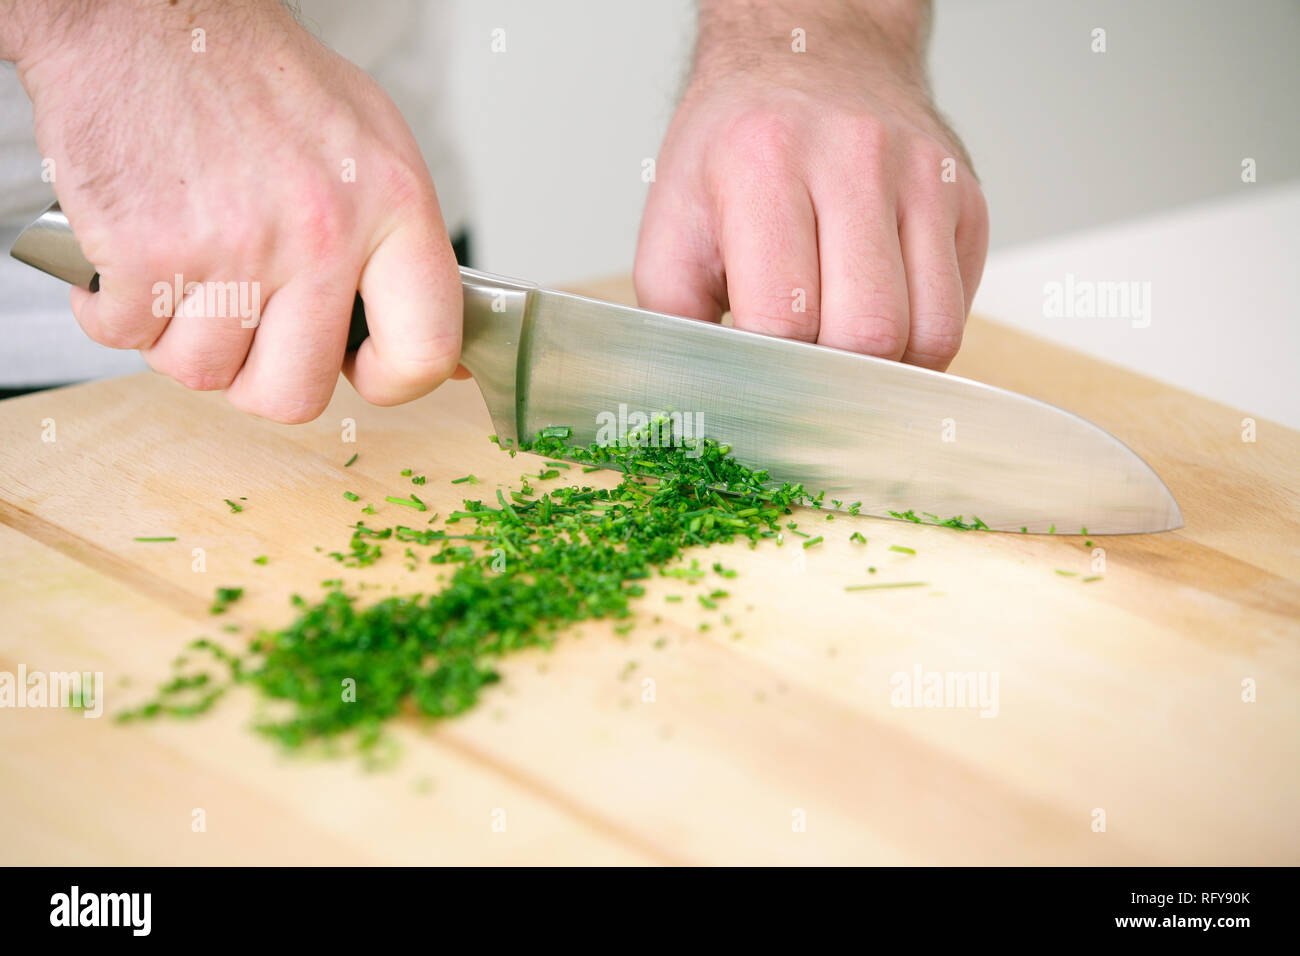 https://c8.alamy.com/comp/RFY90K/chef-chopping-parsley-on-wodden-board-RFY90K.jpg